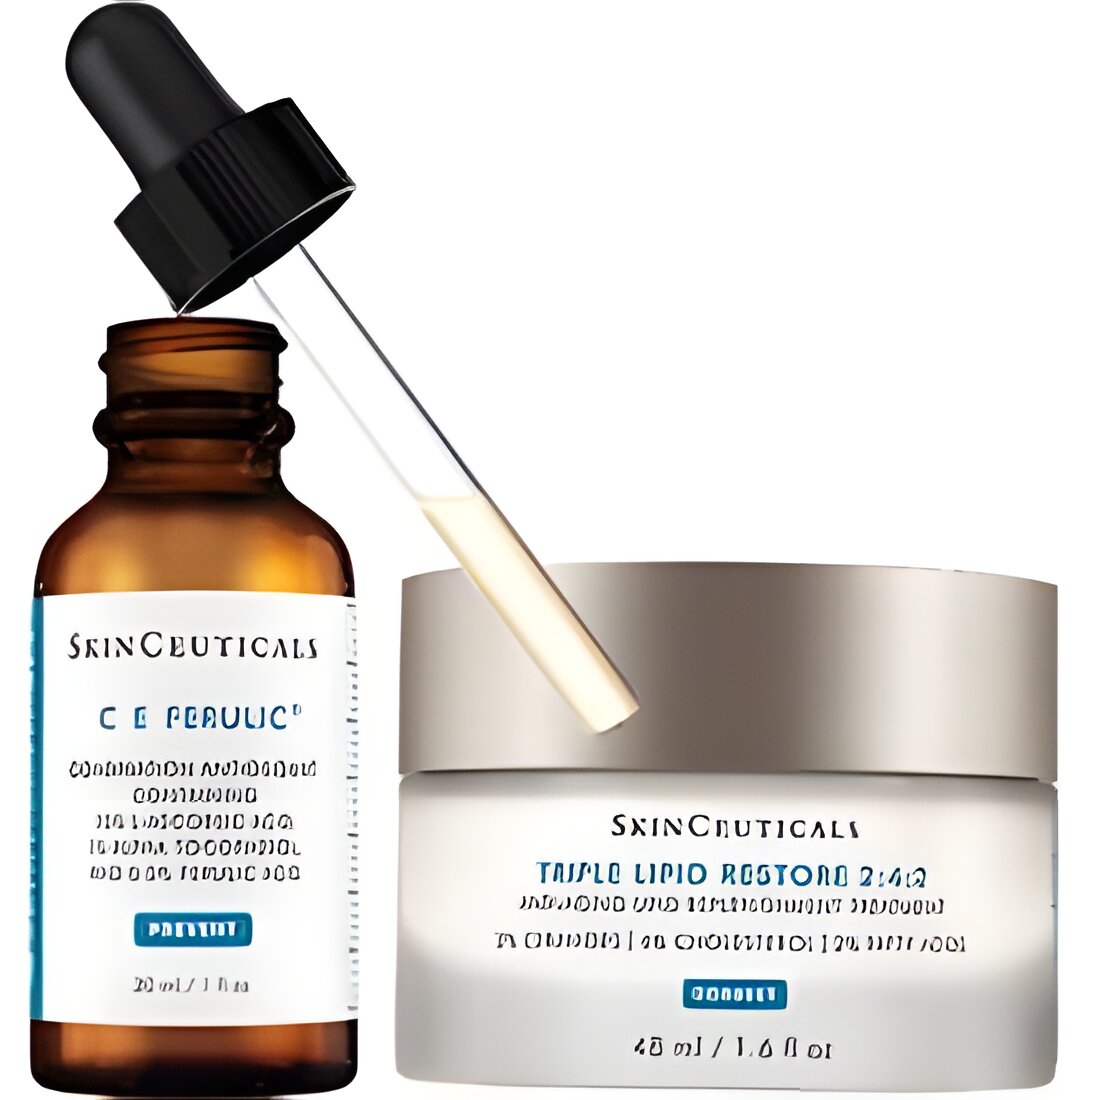 Free SkinCeuticals C E Ferulic & Triple Lipid Restore